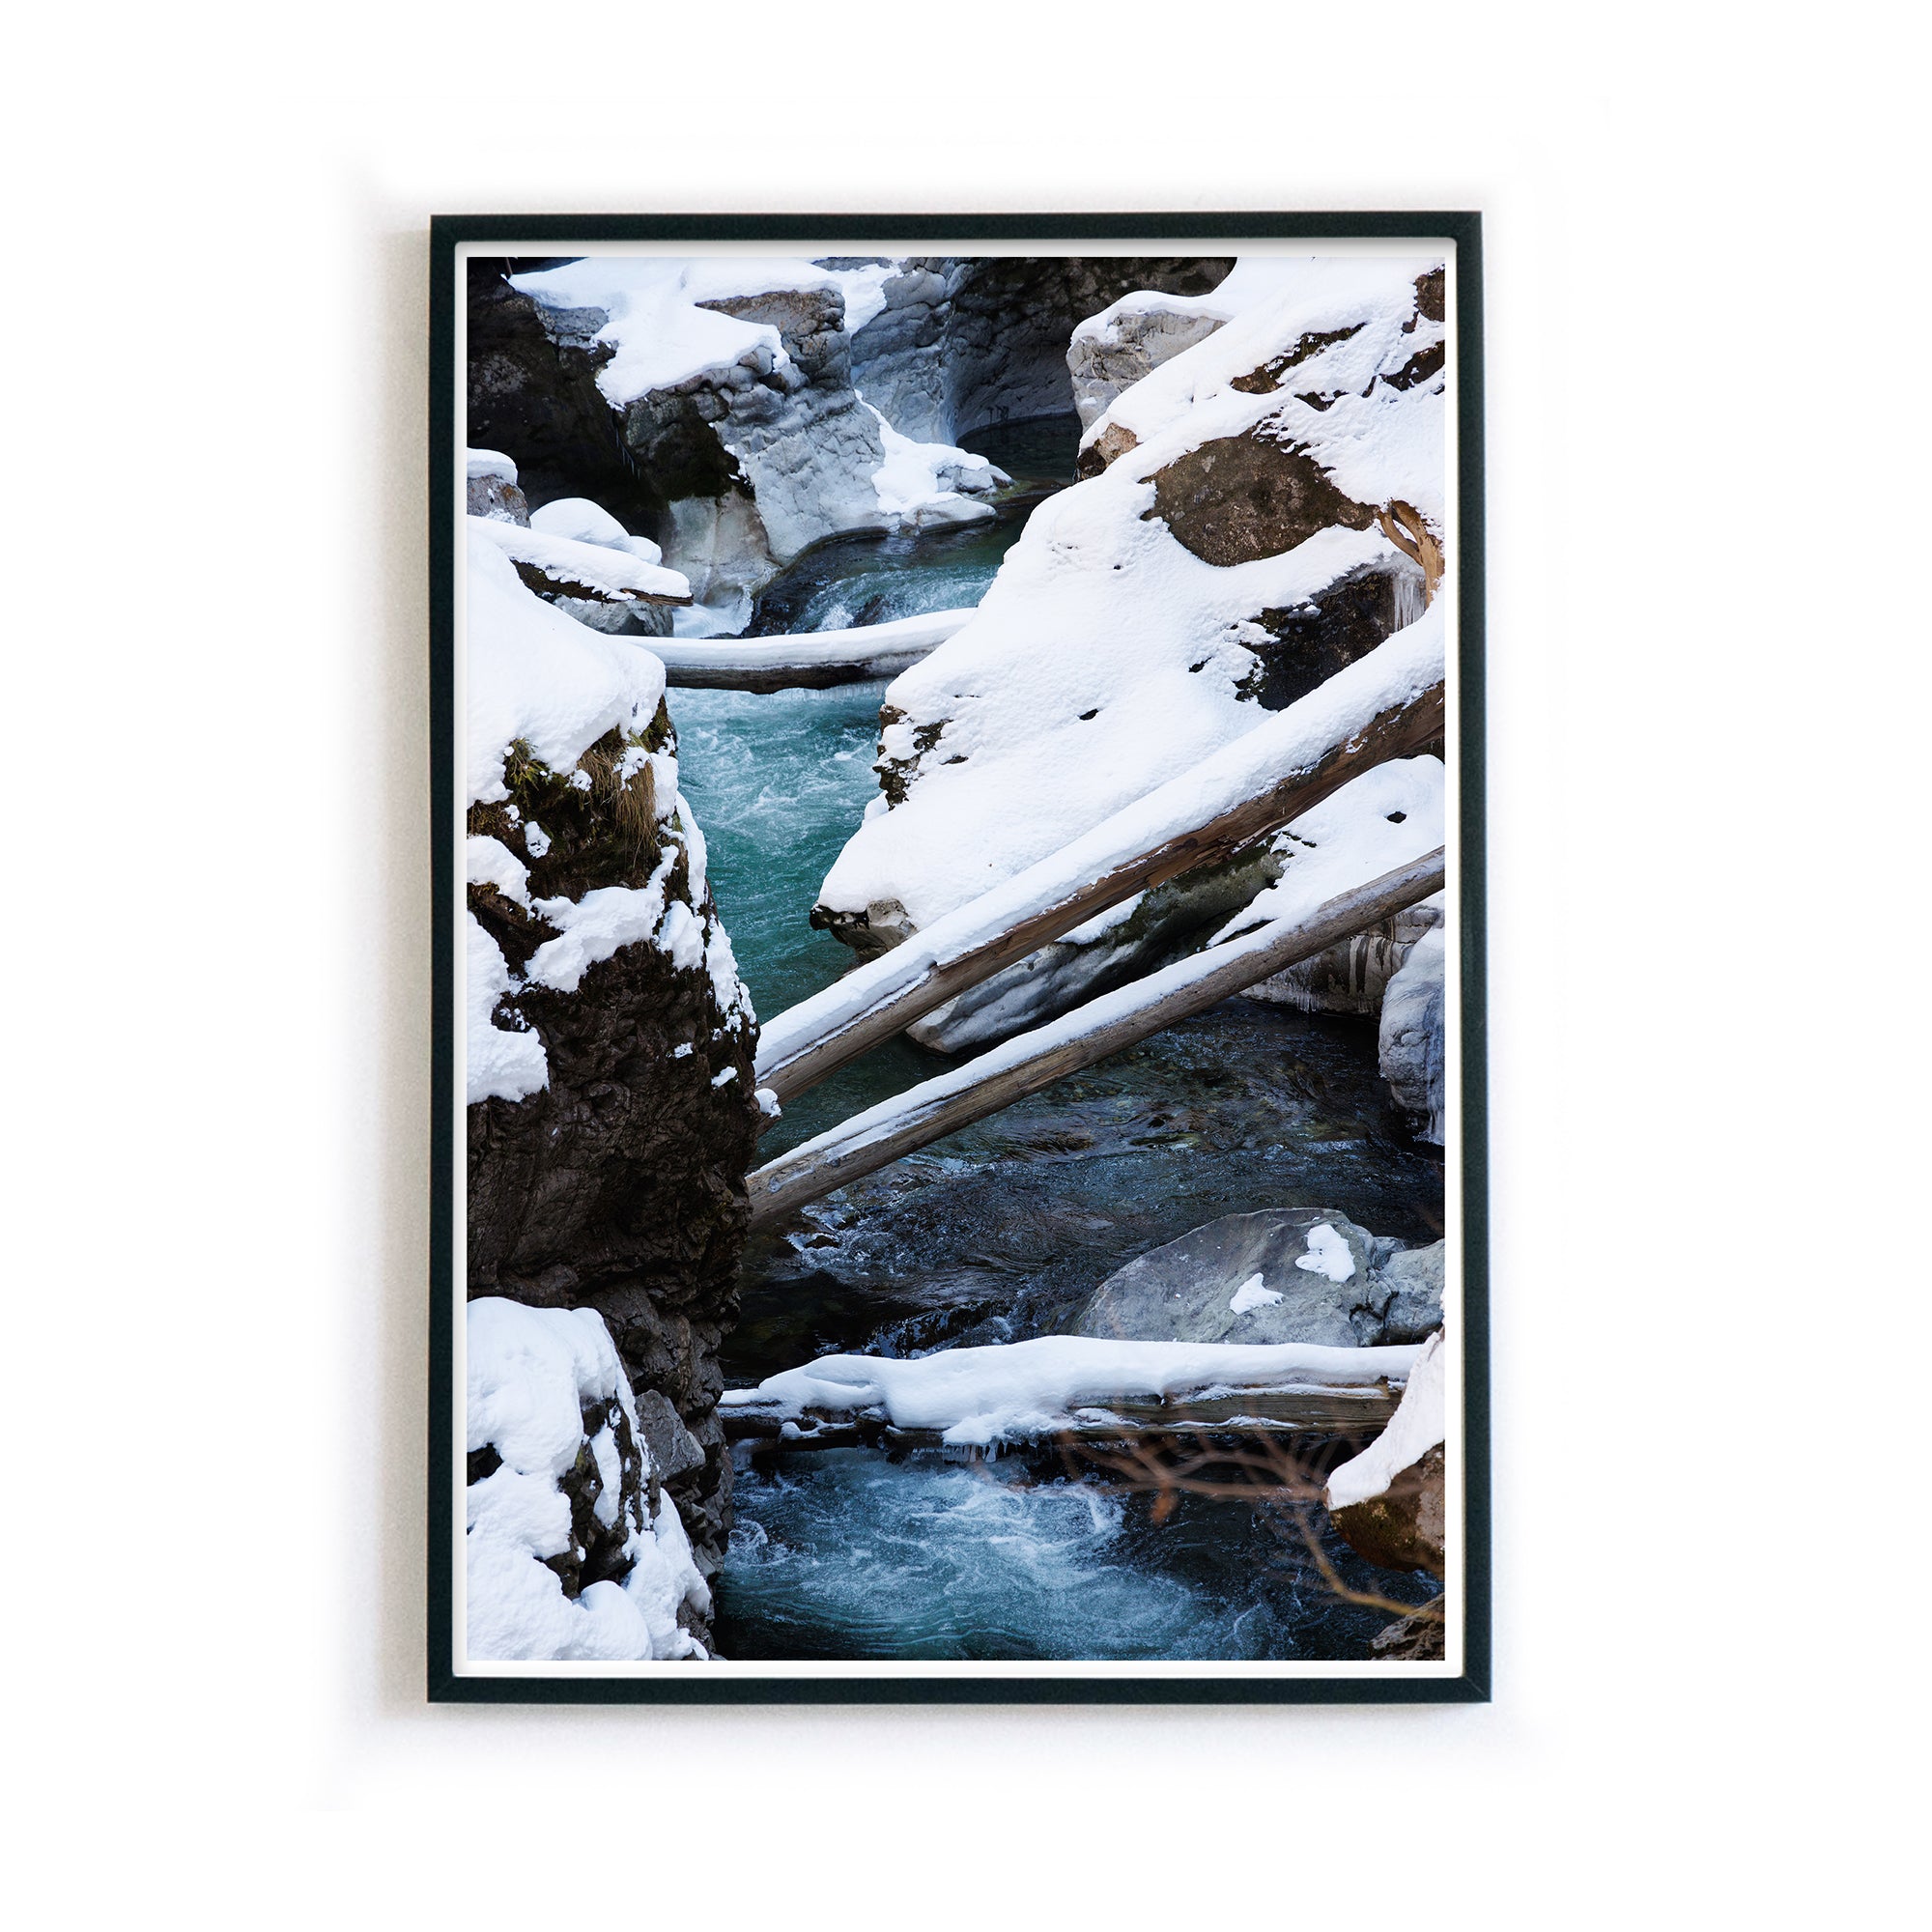 4one-pictures-natur-retro-poster-winter-bild-berg-fluss-wasser-kunst-art-schnee-eis-bilderrahmen-1_b7819b26-62cd-4b00-8e54-85a6ceb1a9e4.jpg